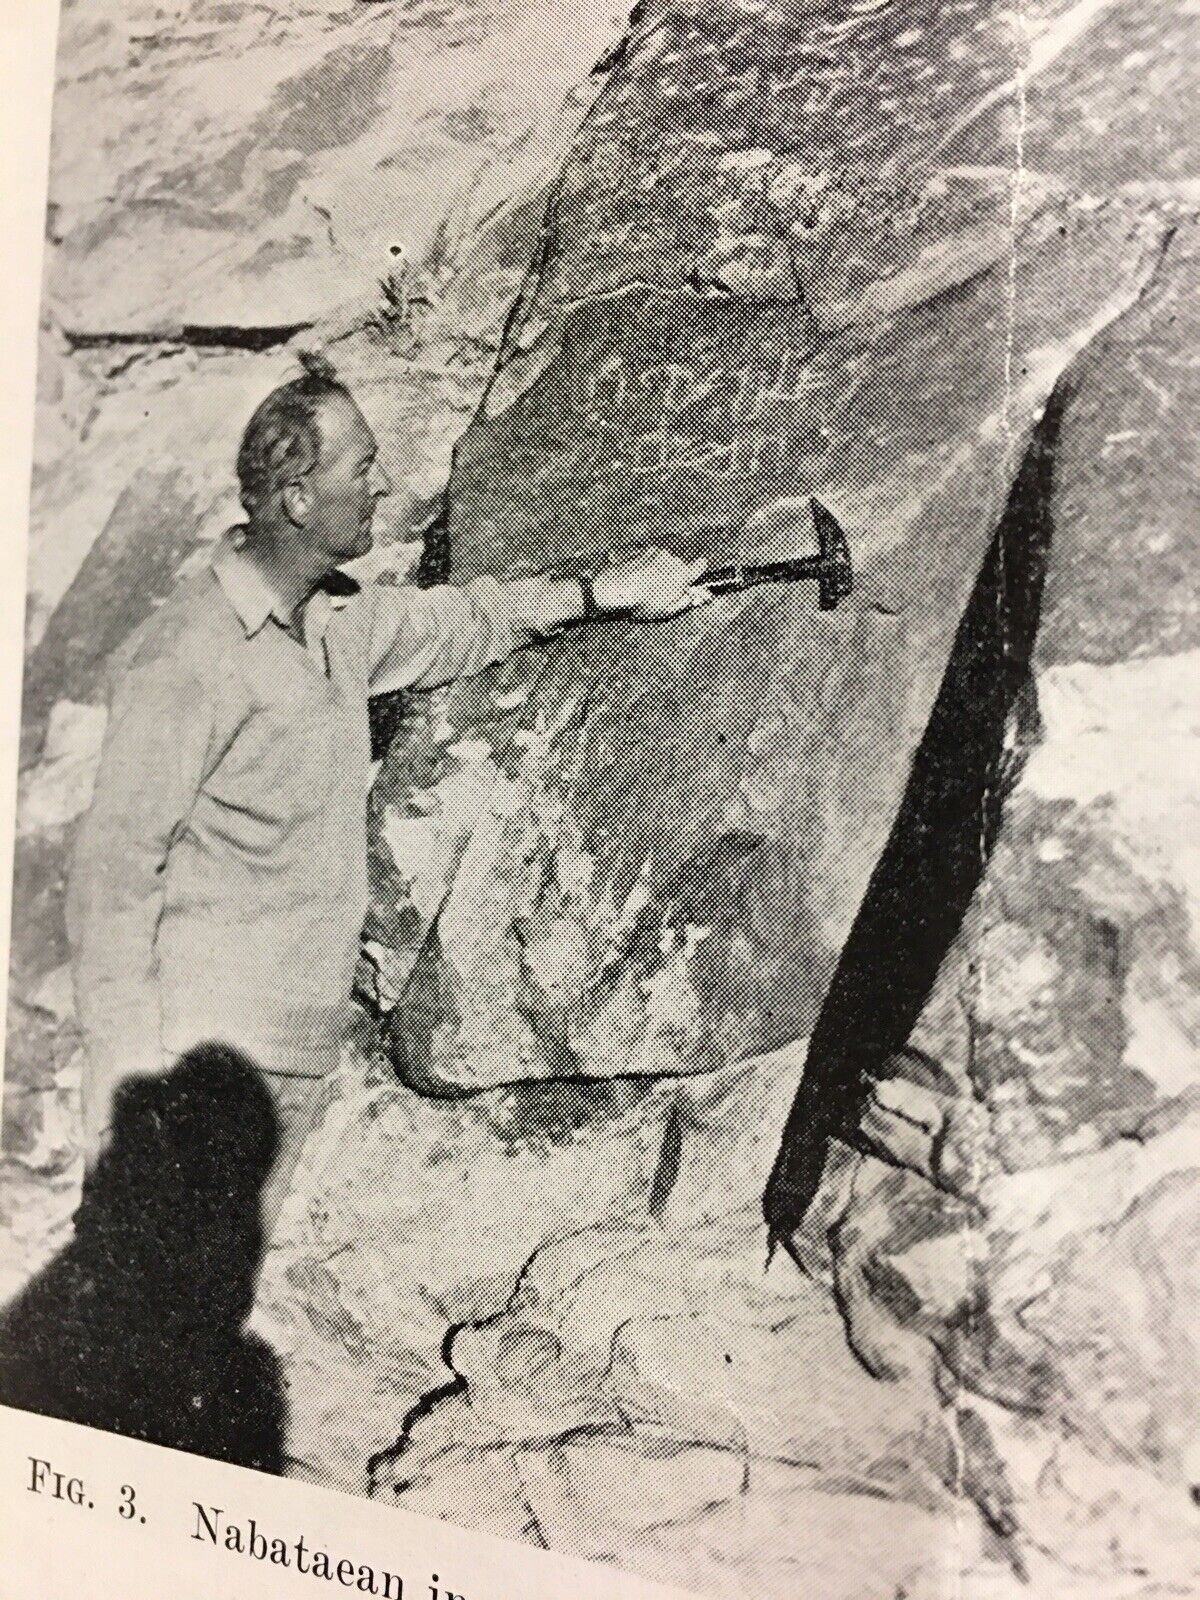 1948 Egypt Exploration Sinai University California African Expedition Albright